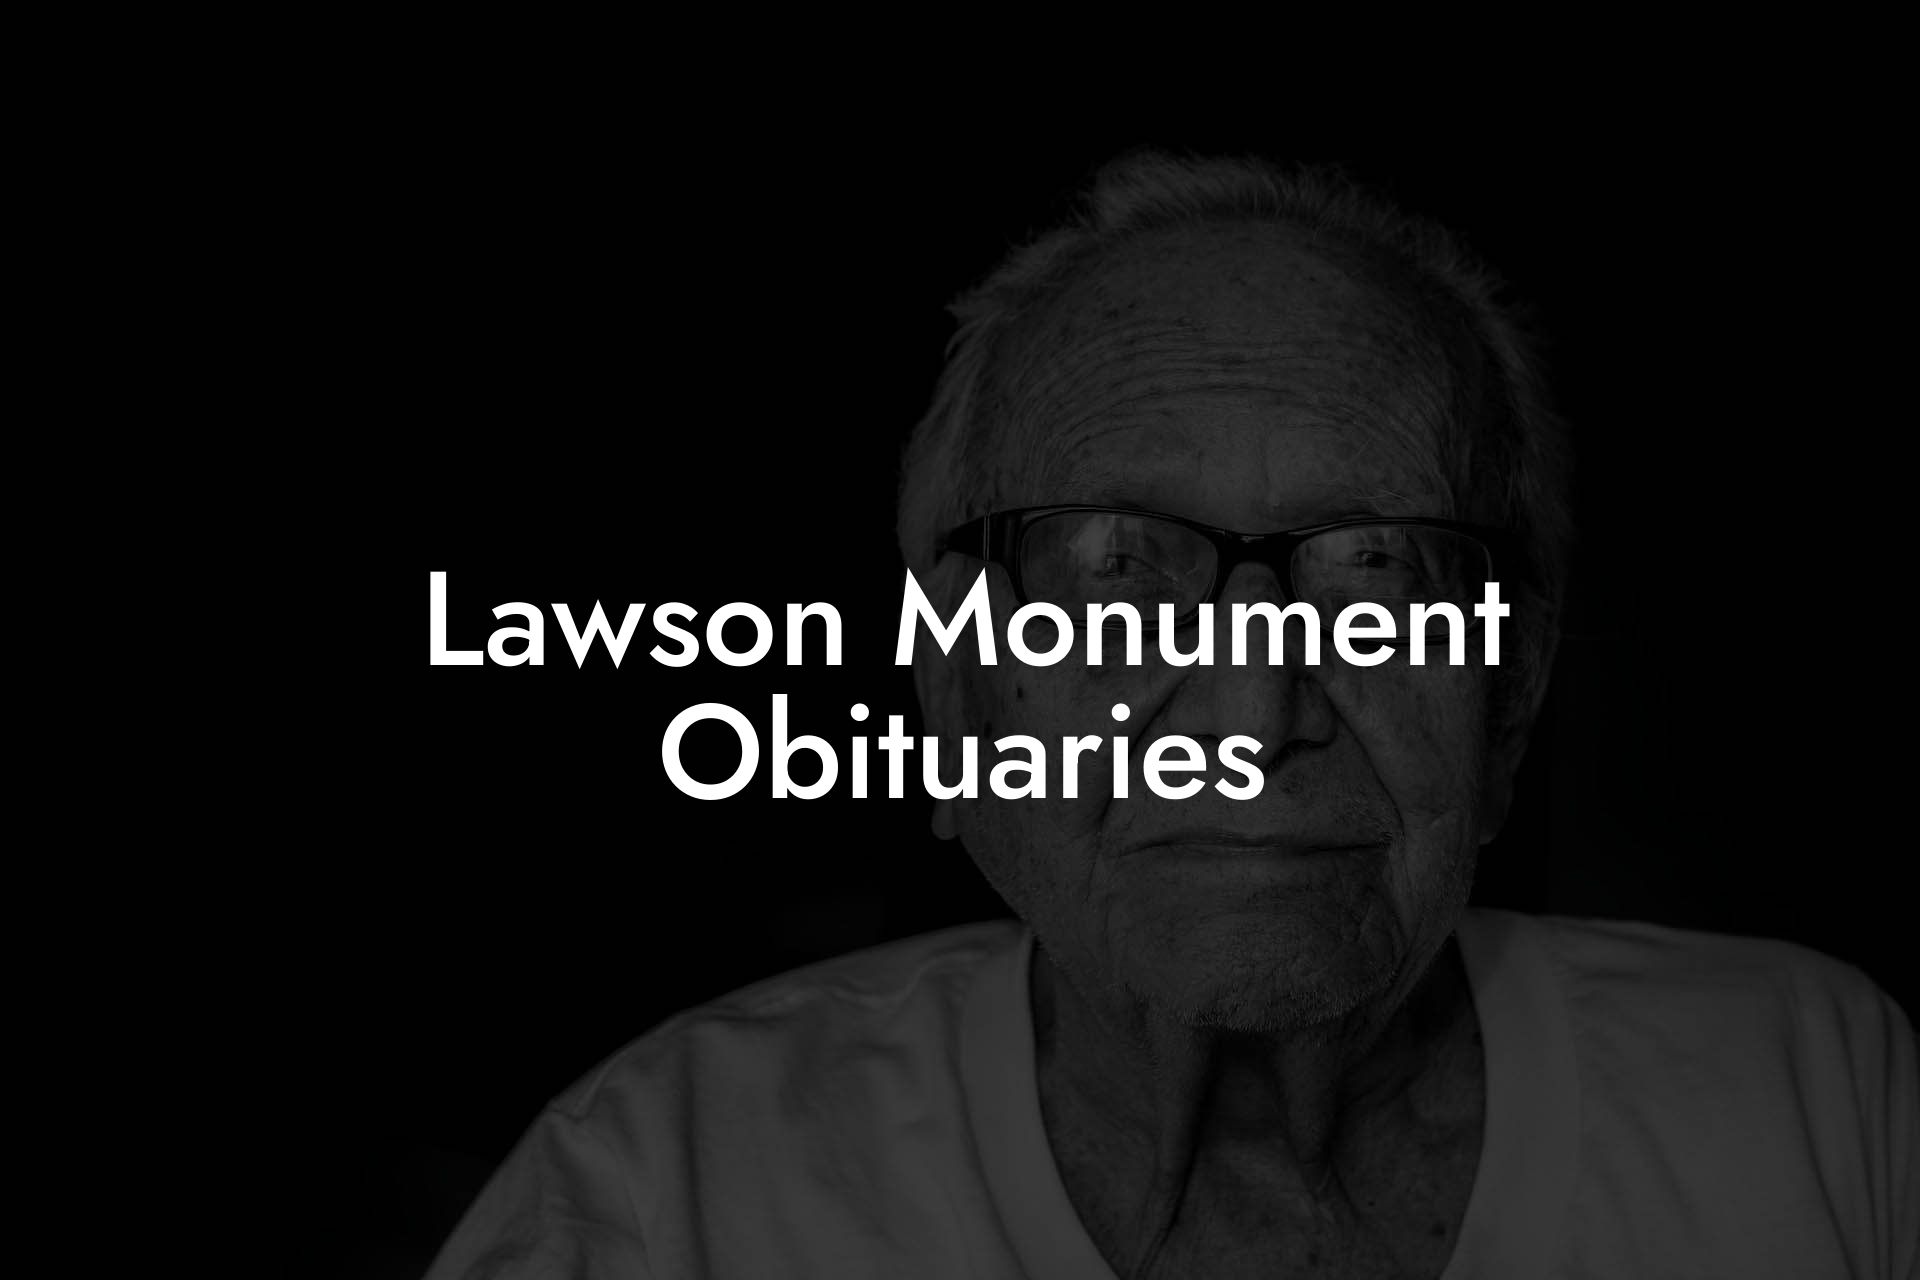 Lawson Monument Obituaries